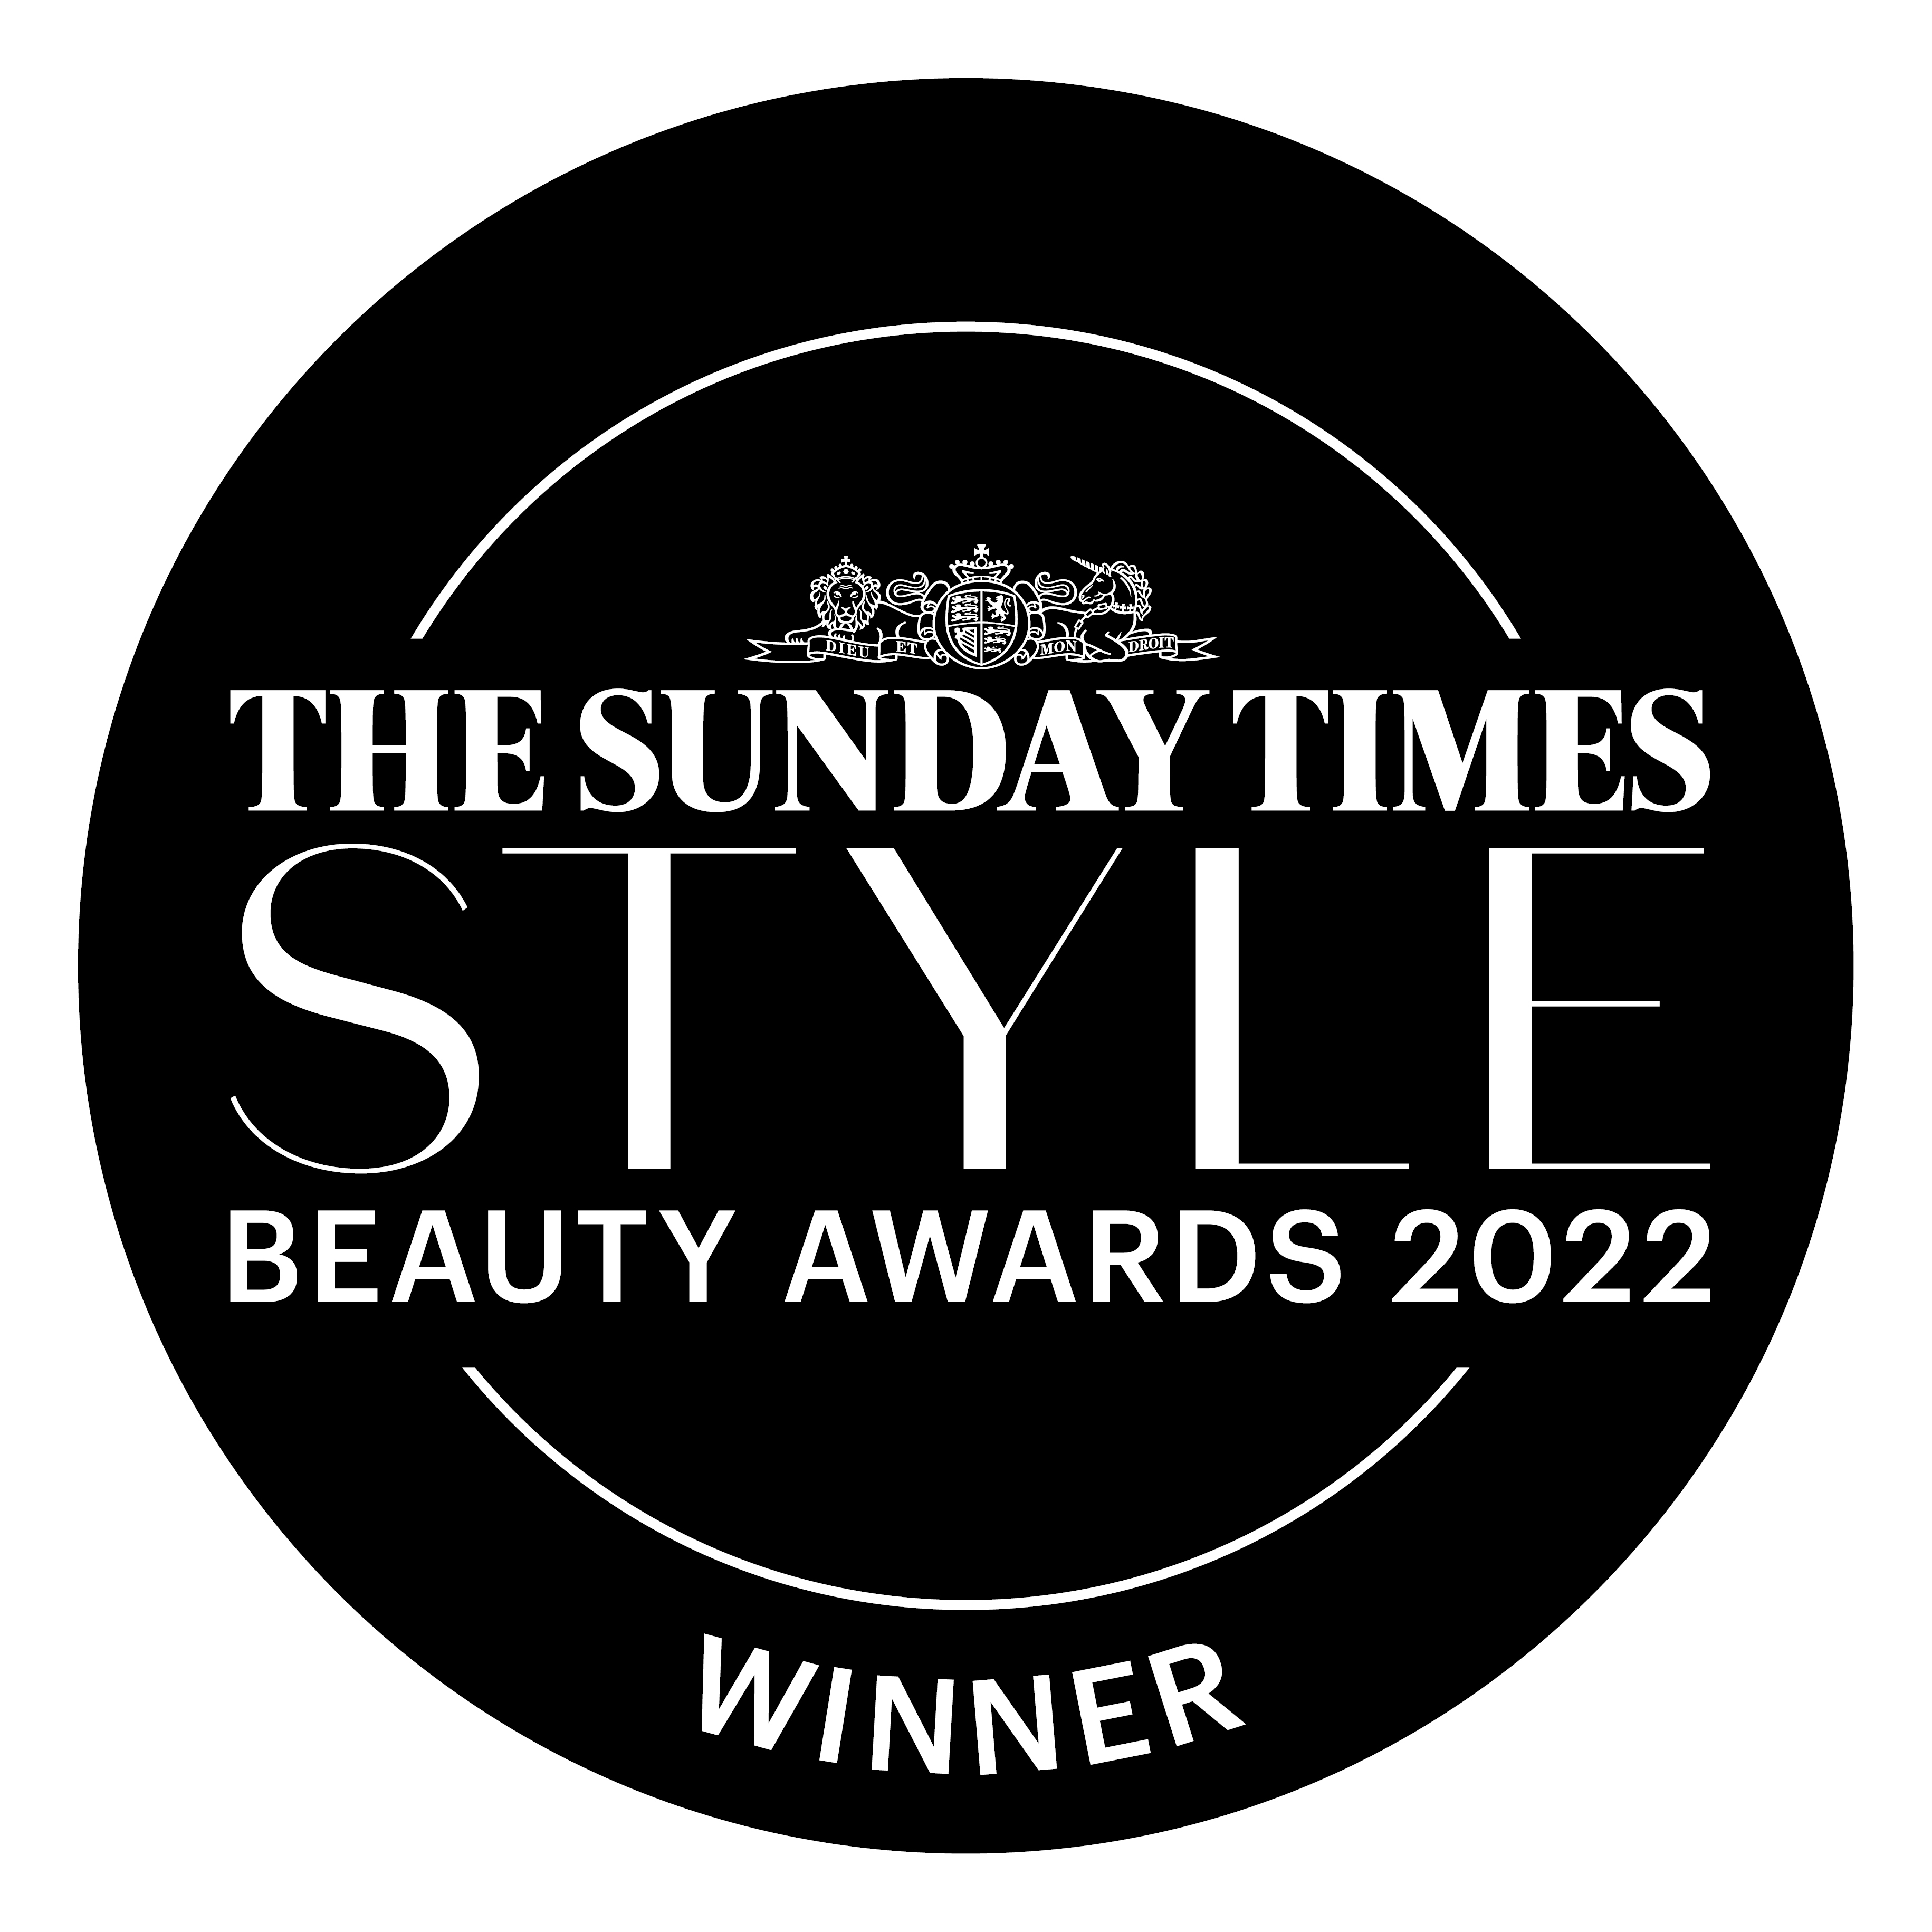 The Sunday Times Style Beauty Awards Winners 2022